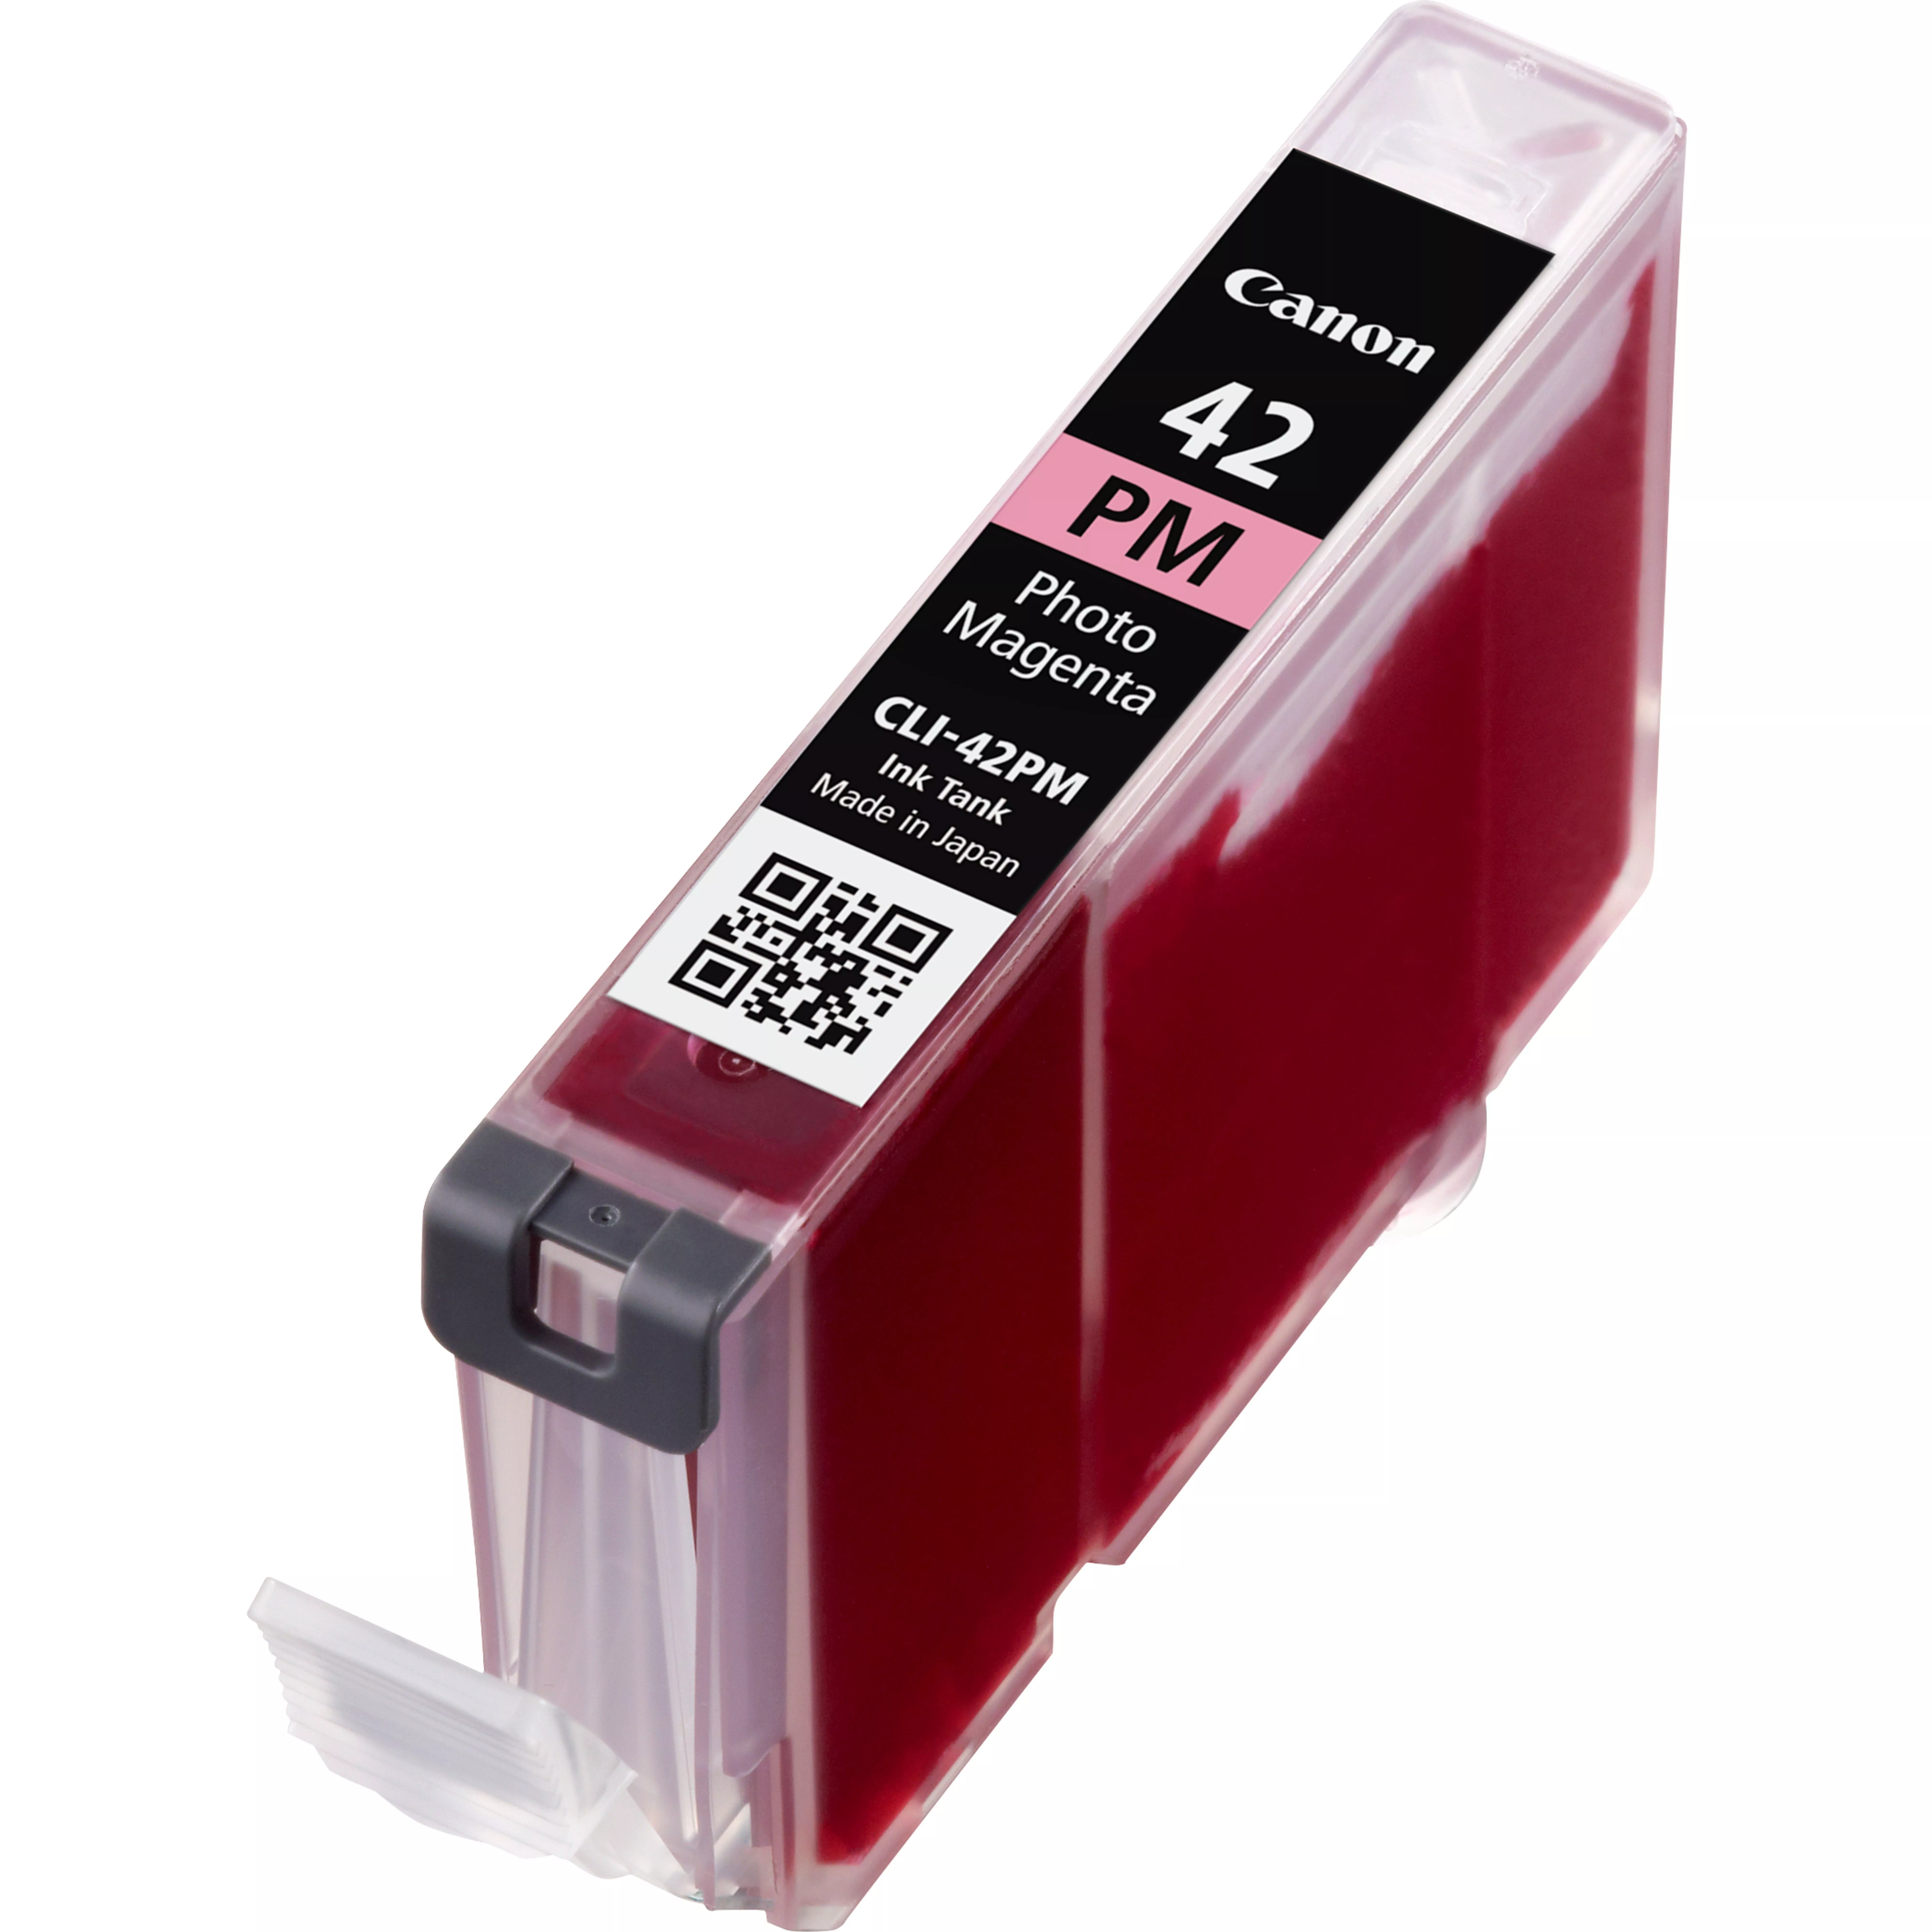 Achat CANON 1LB CLI-42PM ink cartridge photo magenta standard au meilleur prix